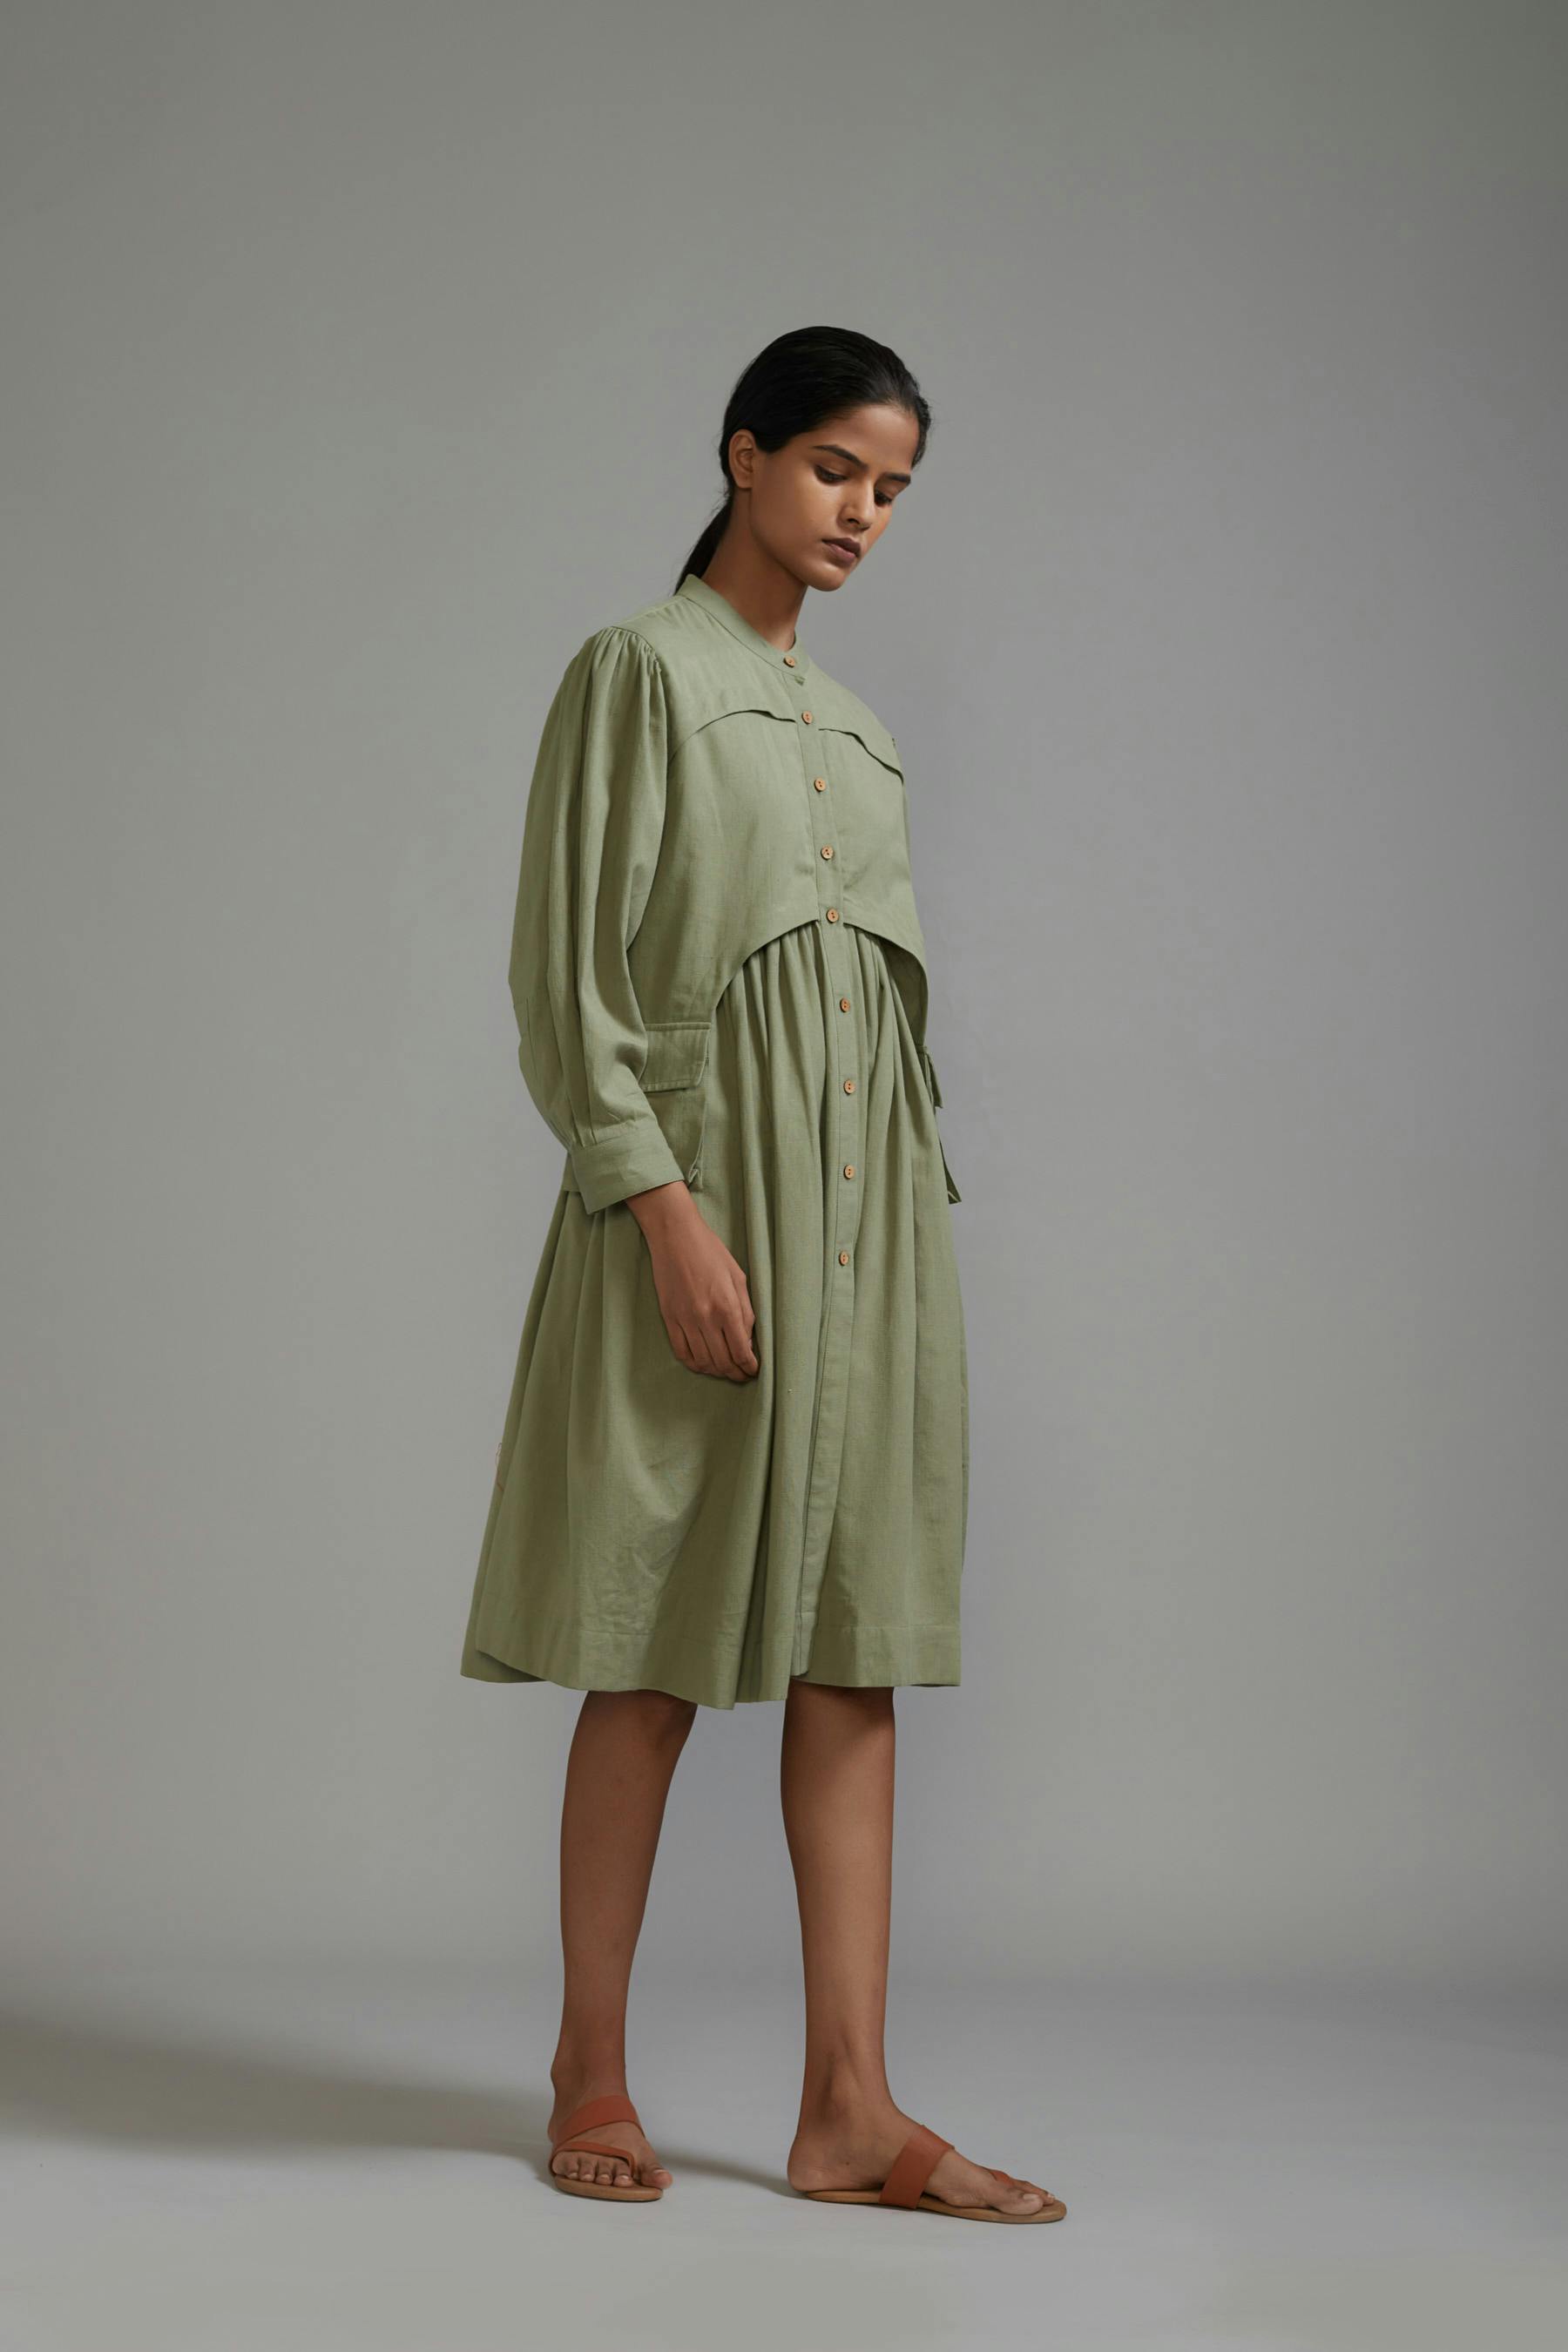 Thumbnail preview #1 for Green Safari Short Dress